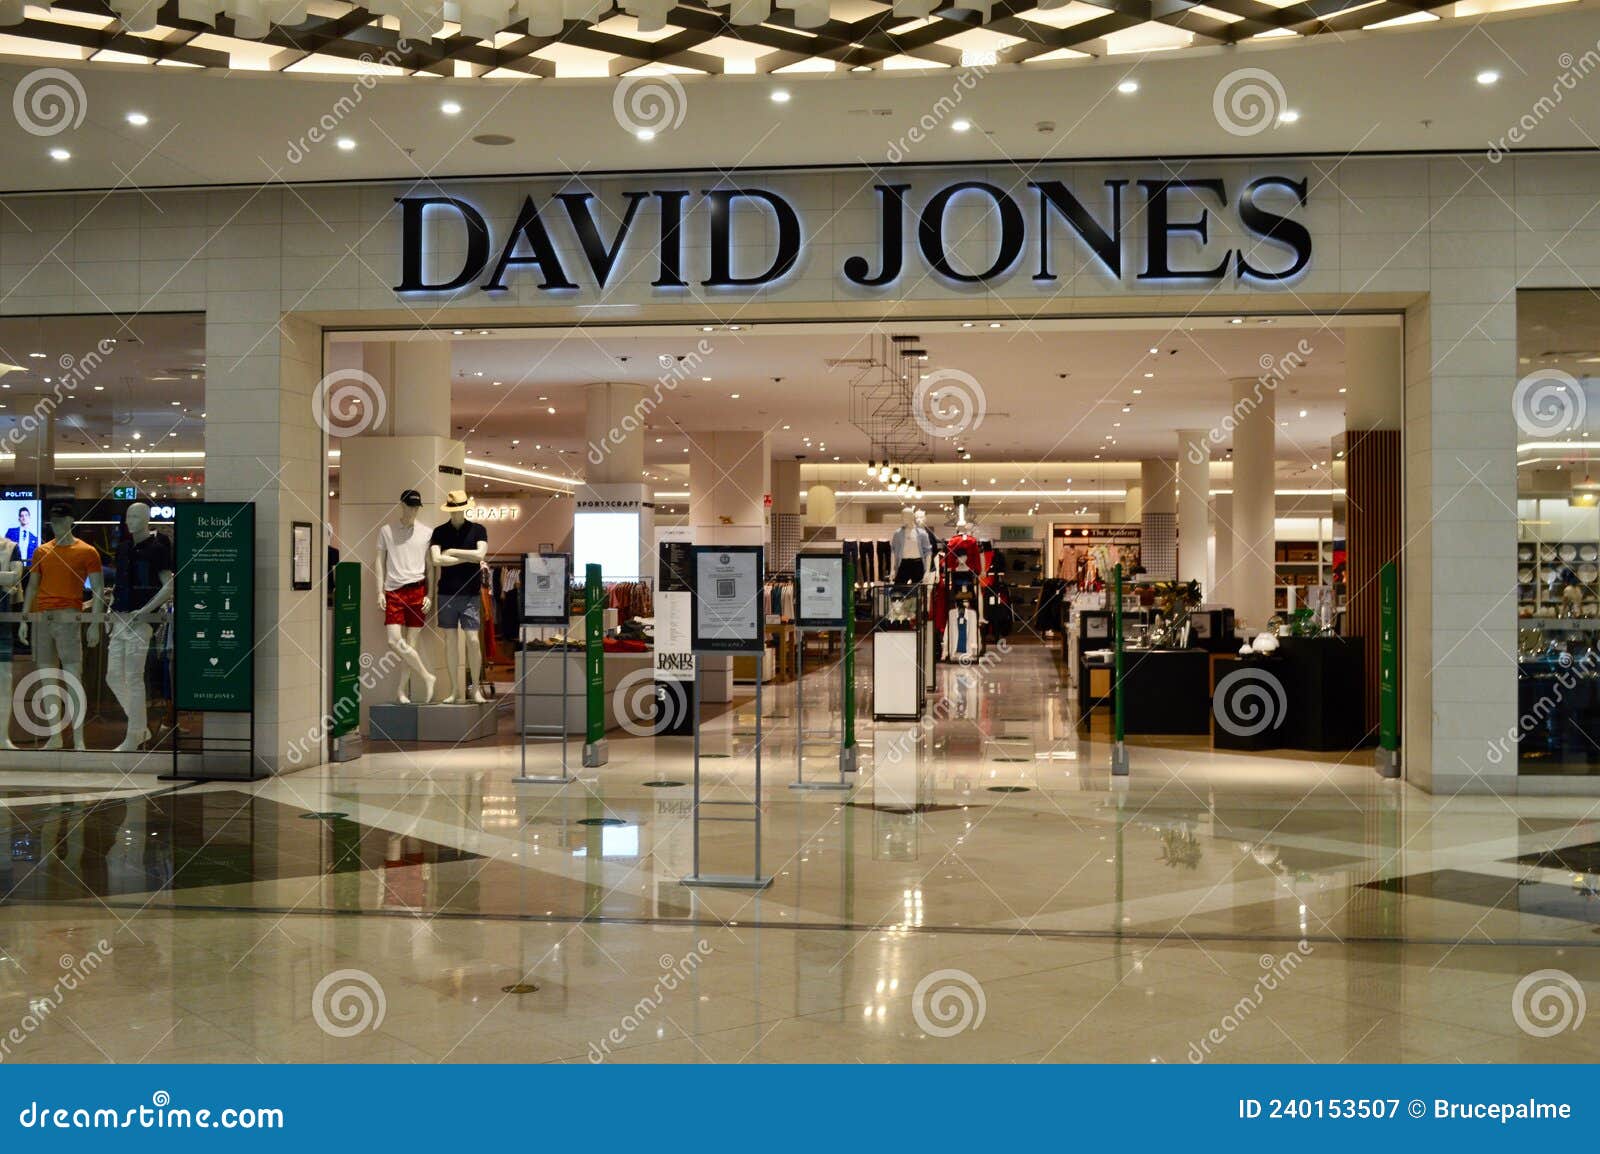 A David Jones Store at the Macquarie Centre in Sydney, Australia